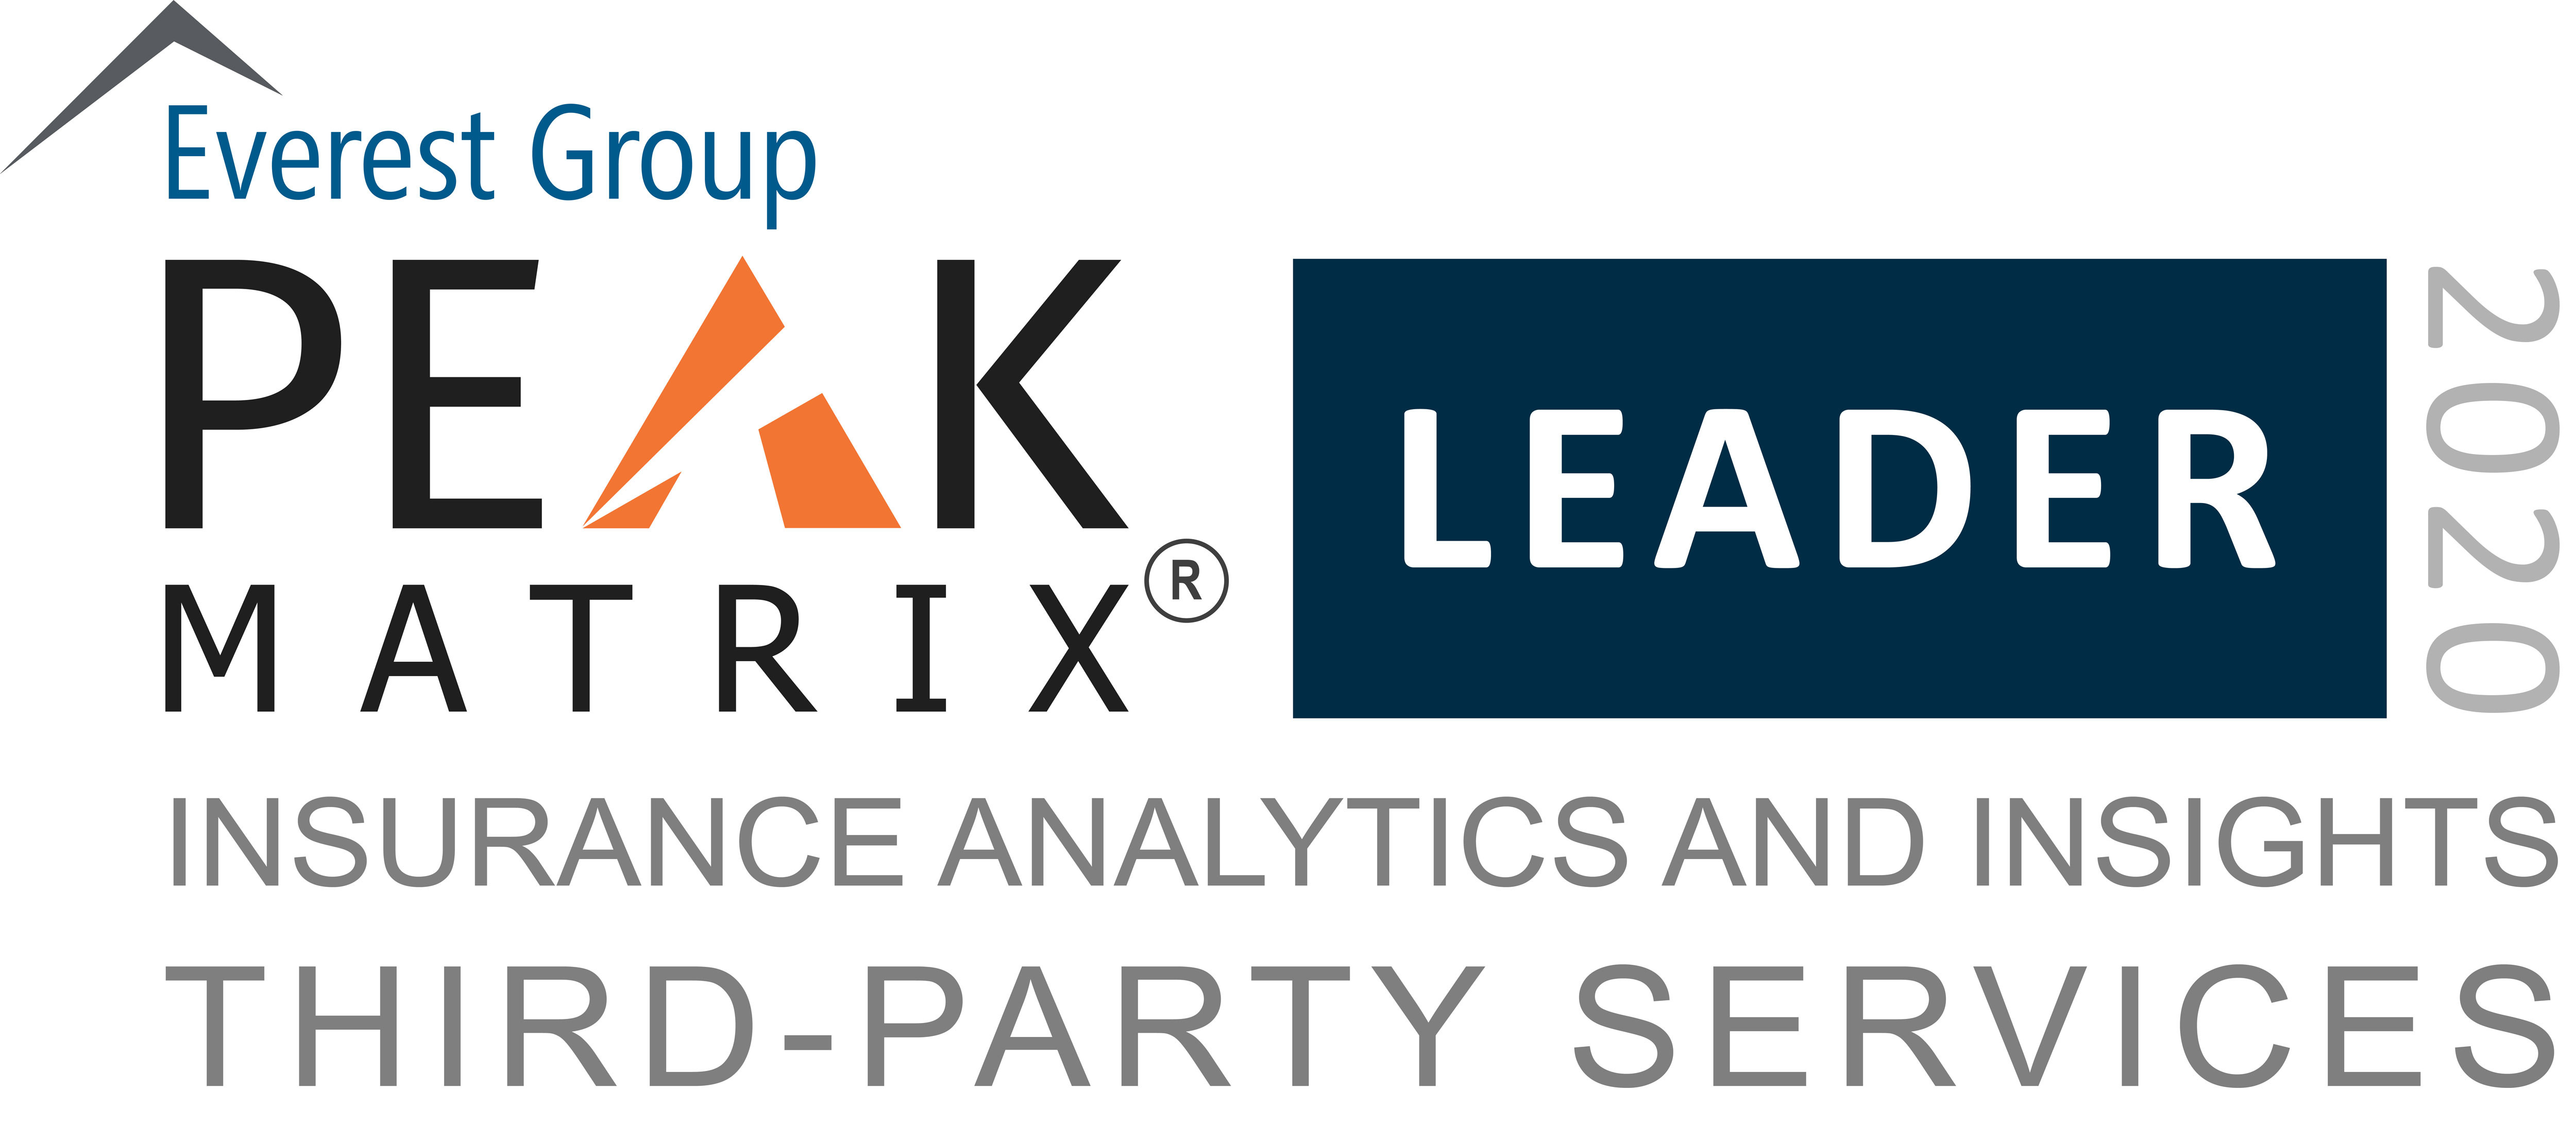 Logo: Everest Group Peak Matrix Insurance Analytics and Insights